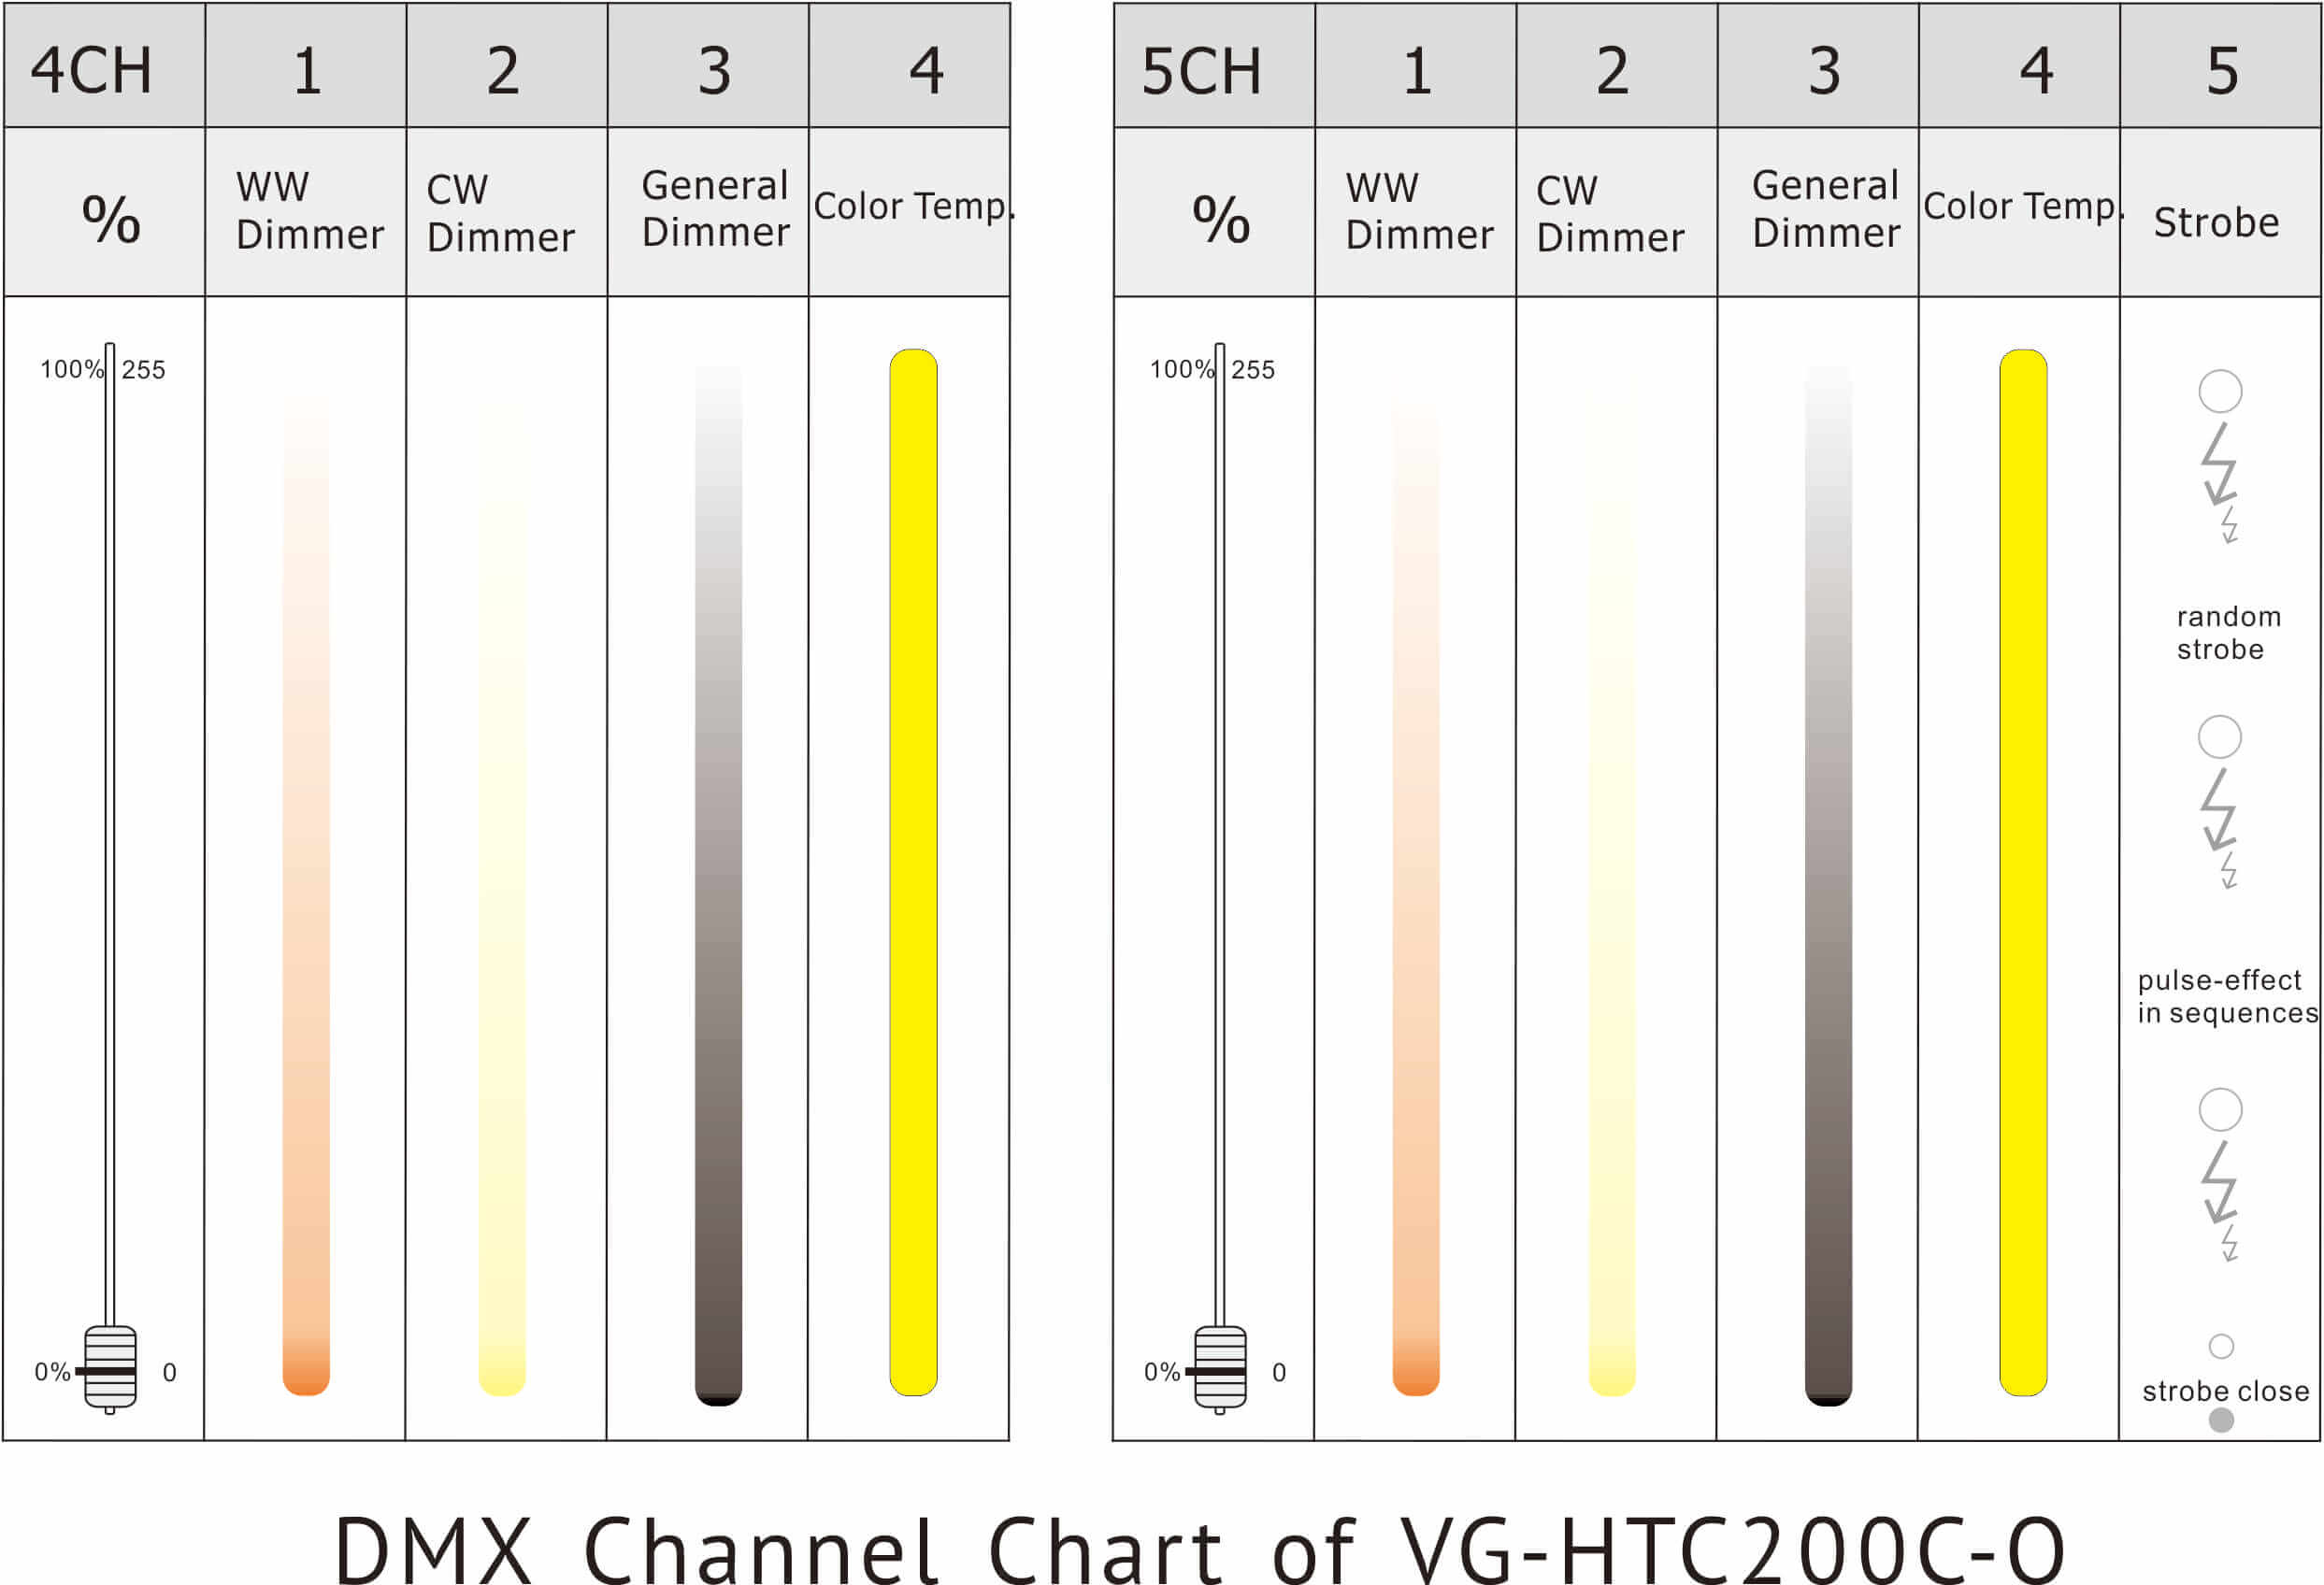 VG-HTC200C-O DMX channel chart